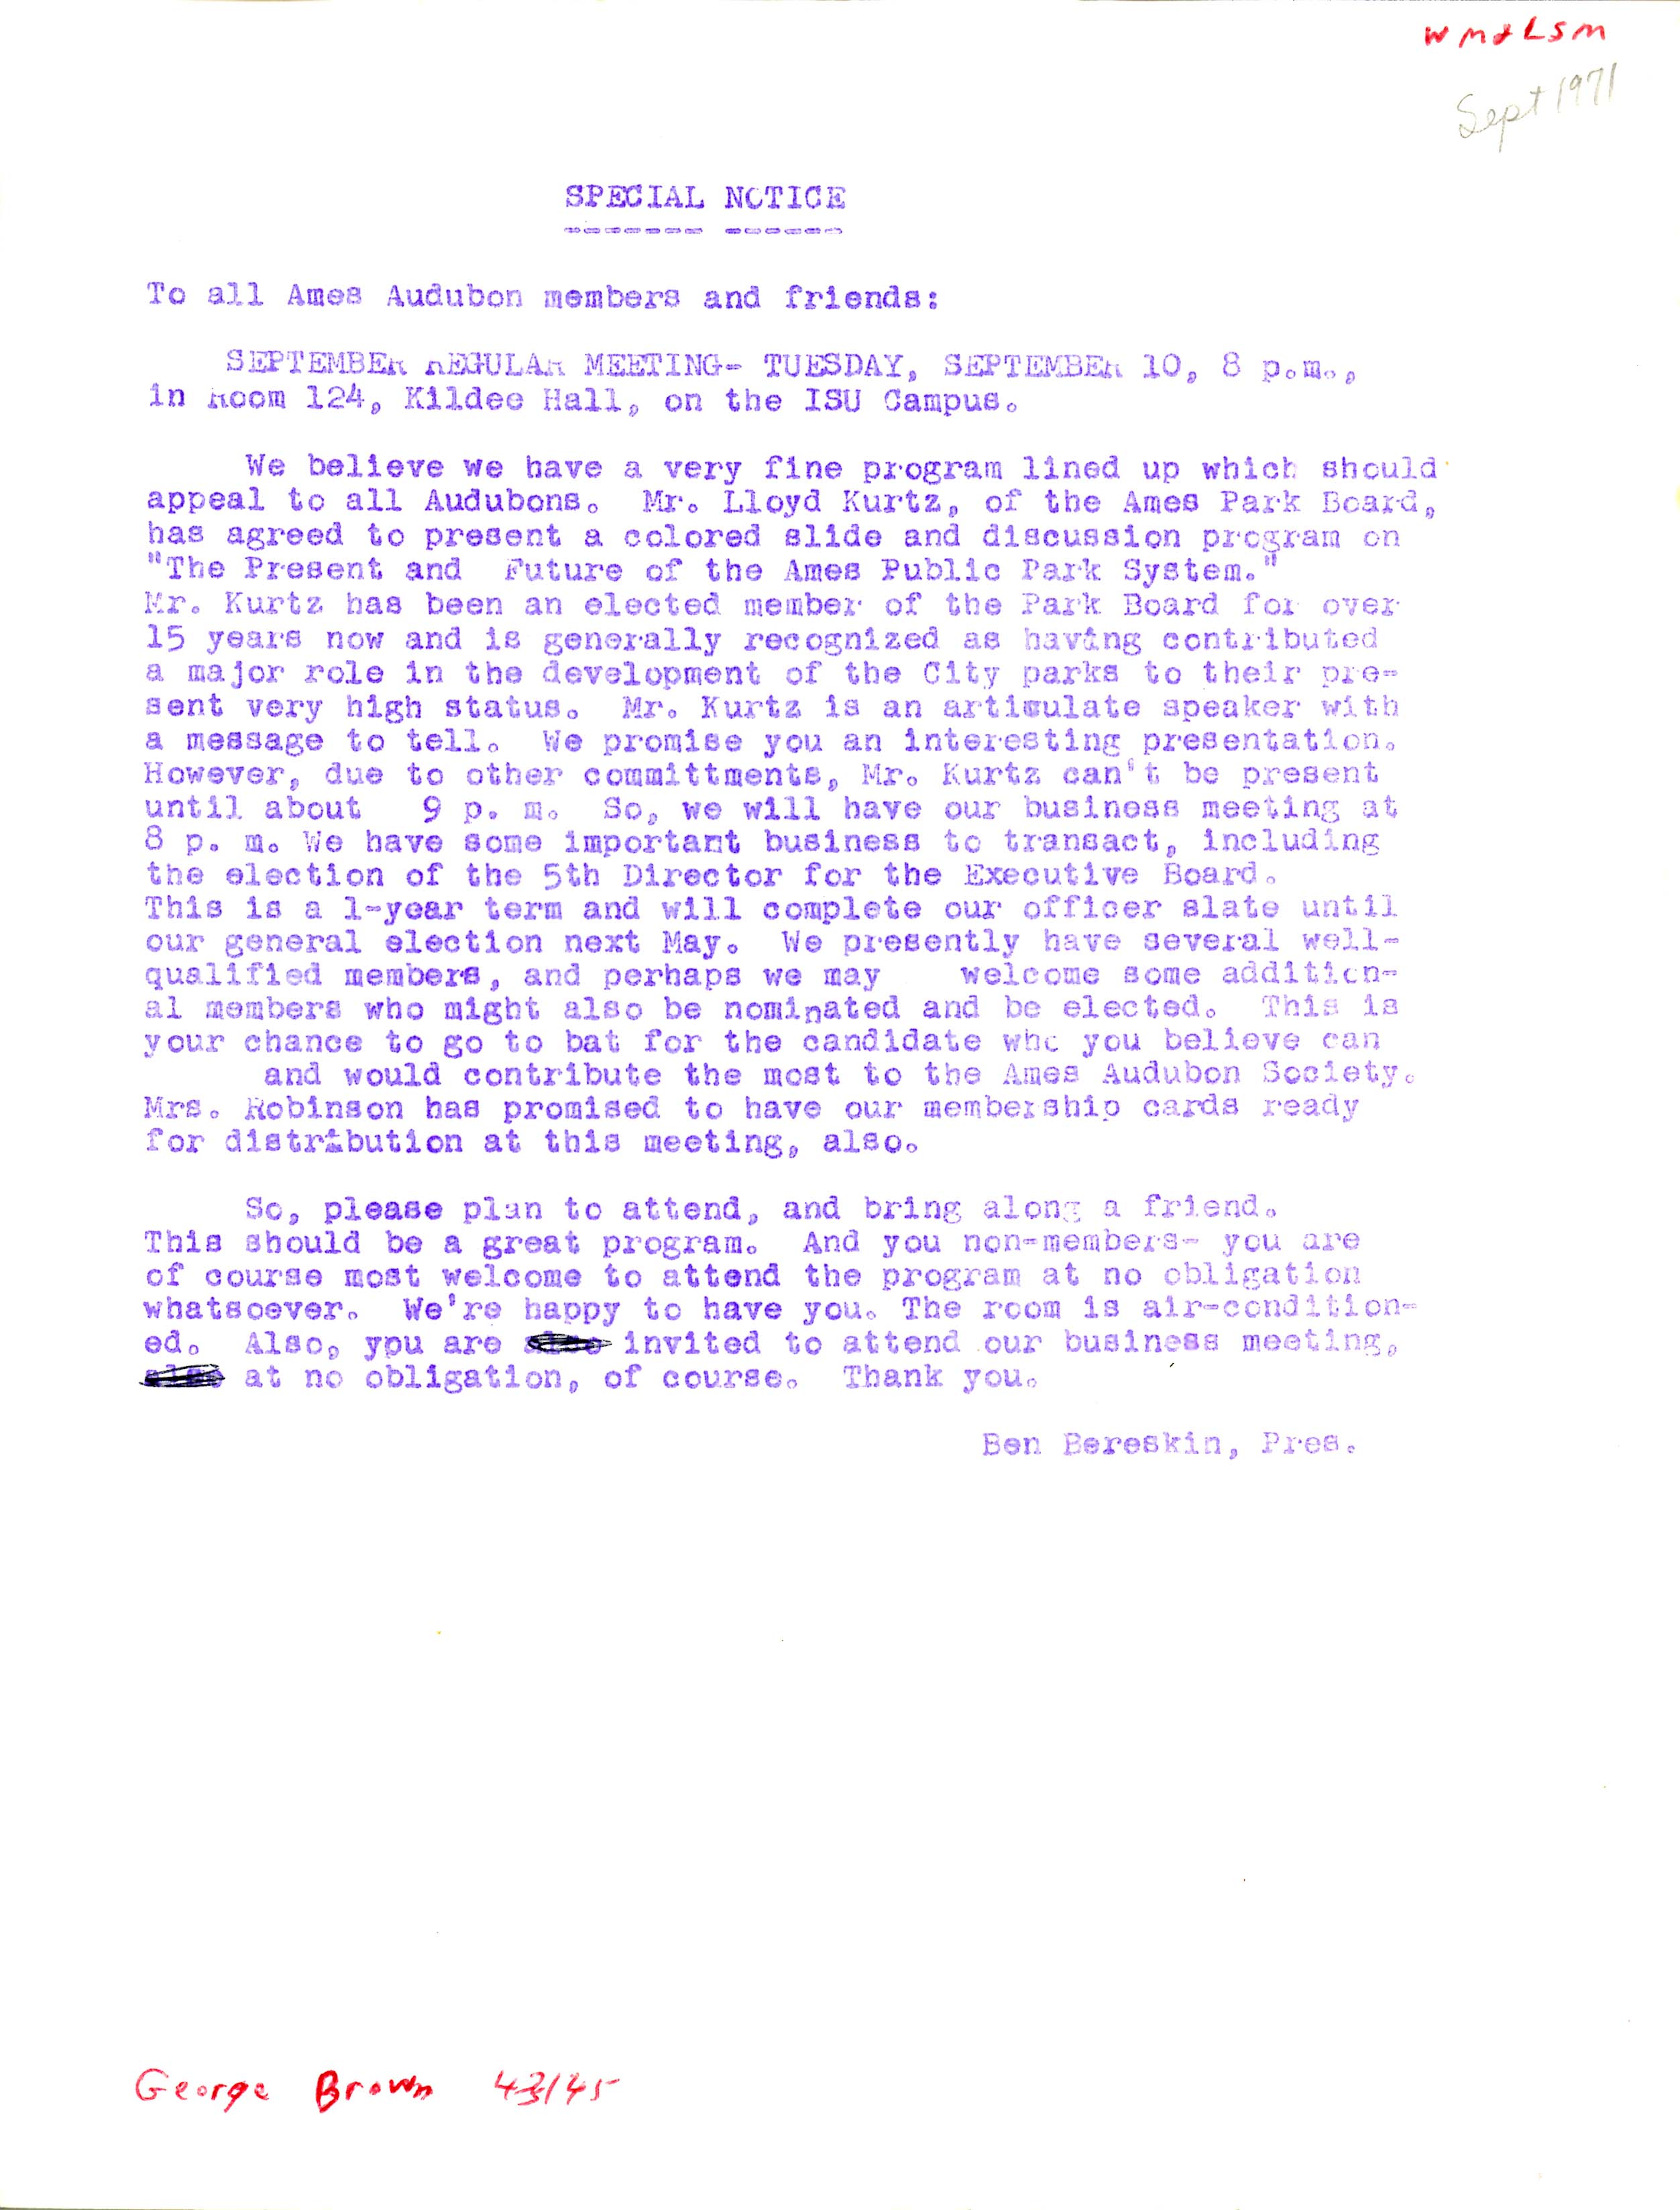 Ben Bereskin letter to Ames Audubon Society members and friends regarding the September meeting and program, September 1971